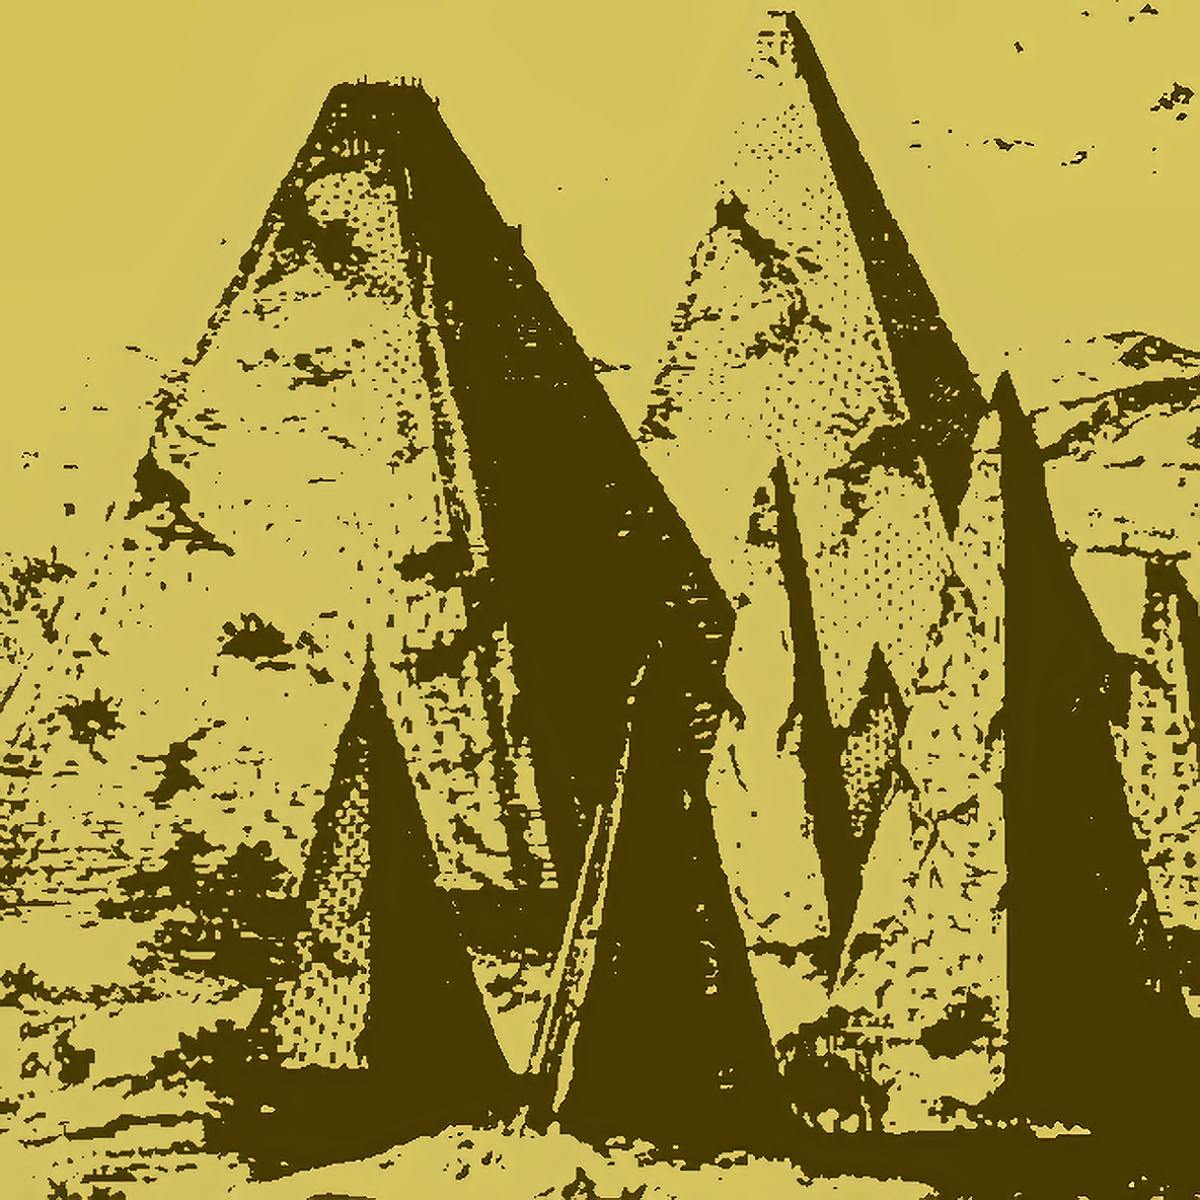 pirâmides imaginárias